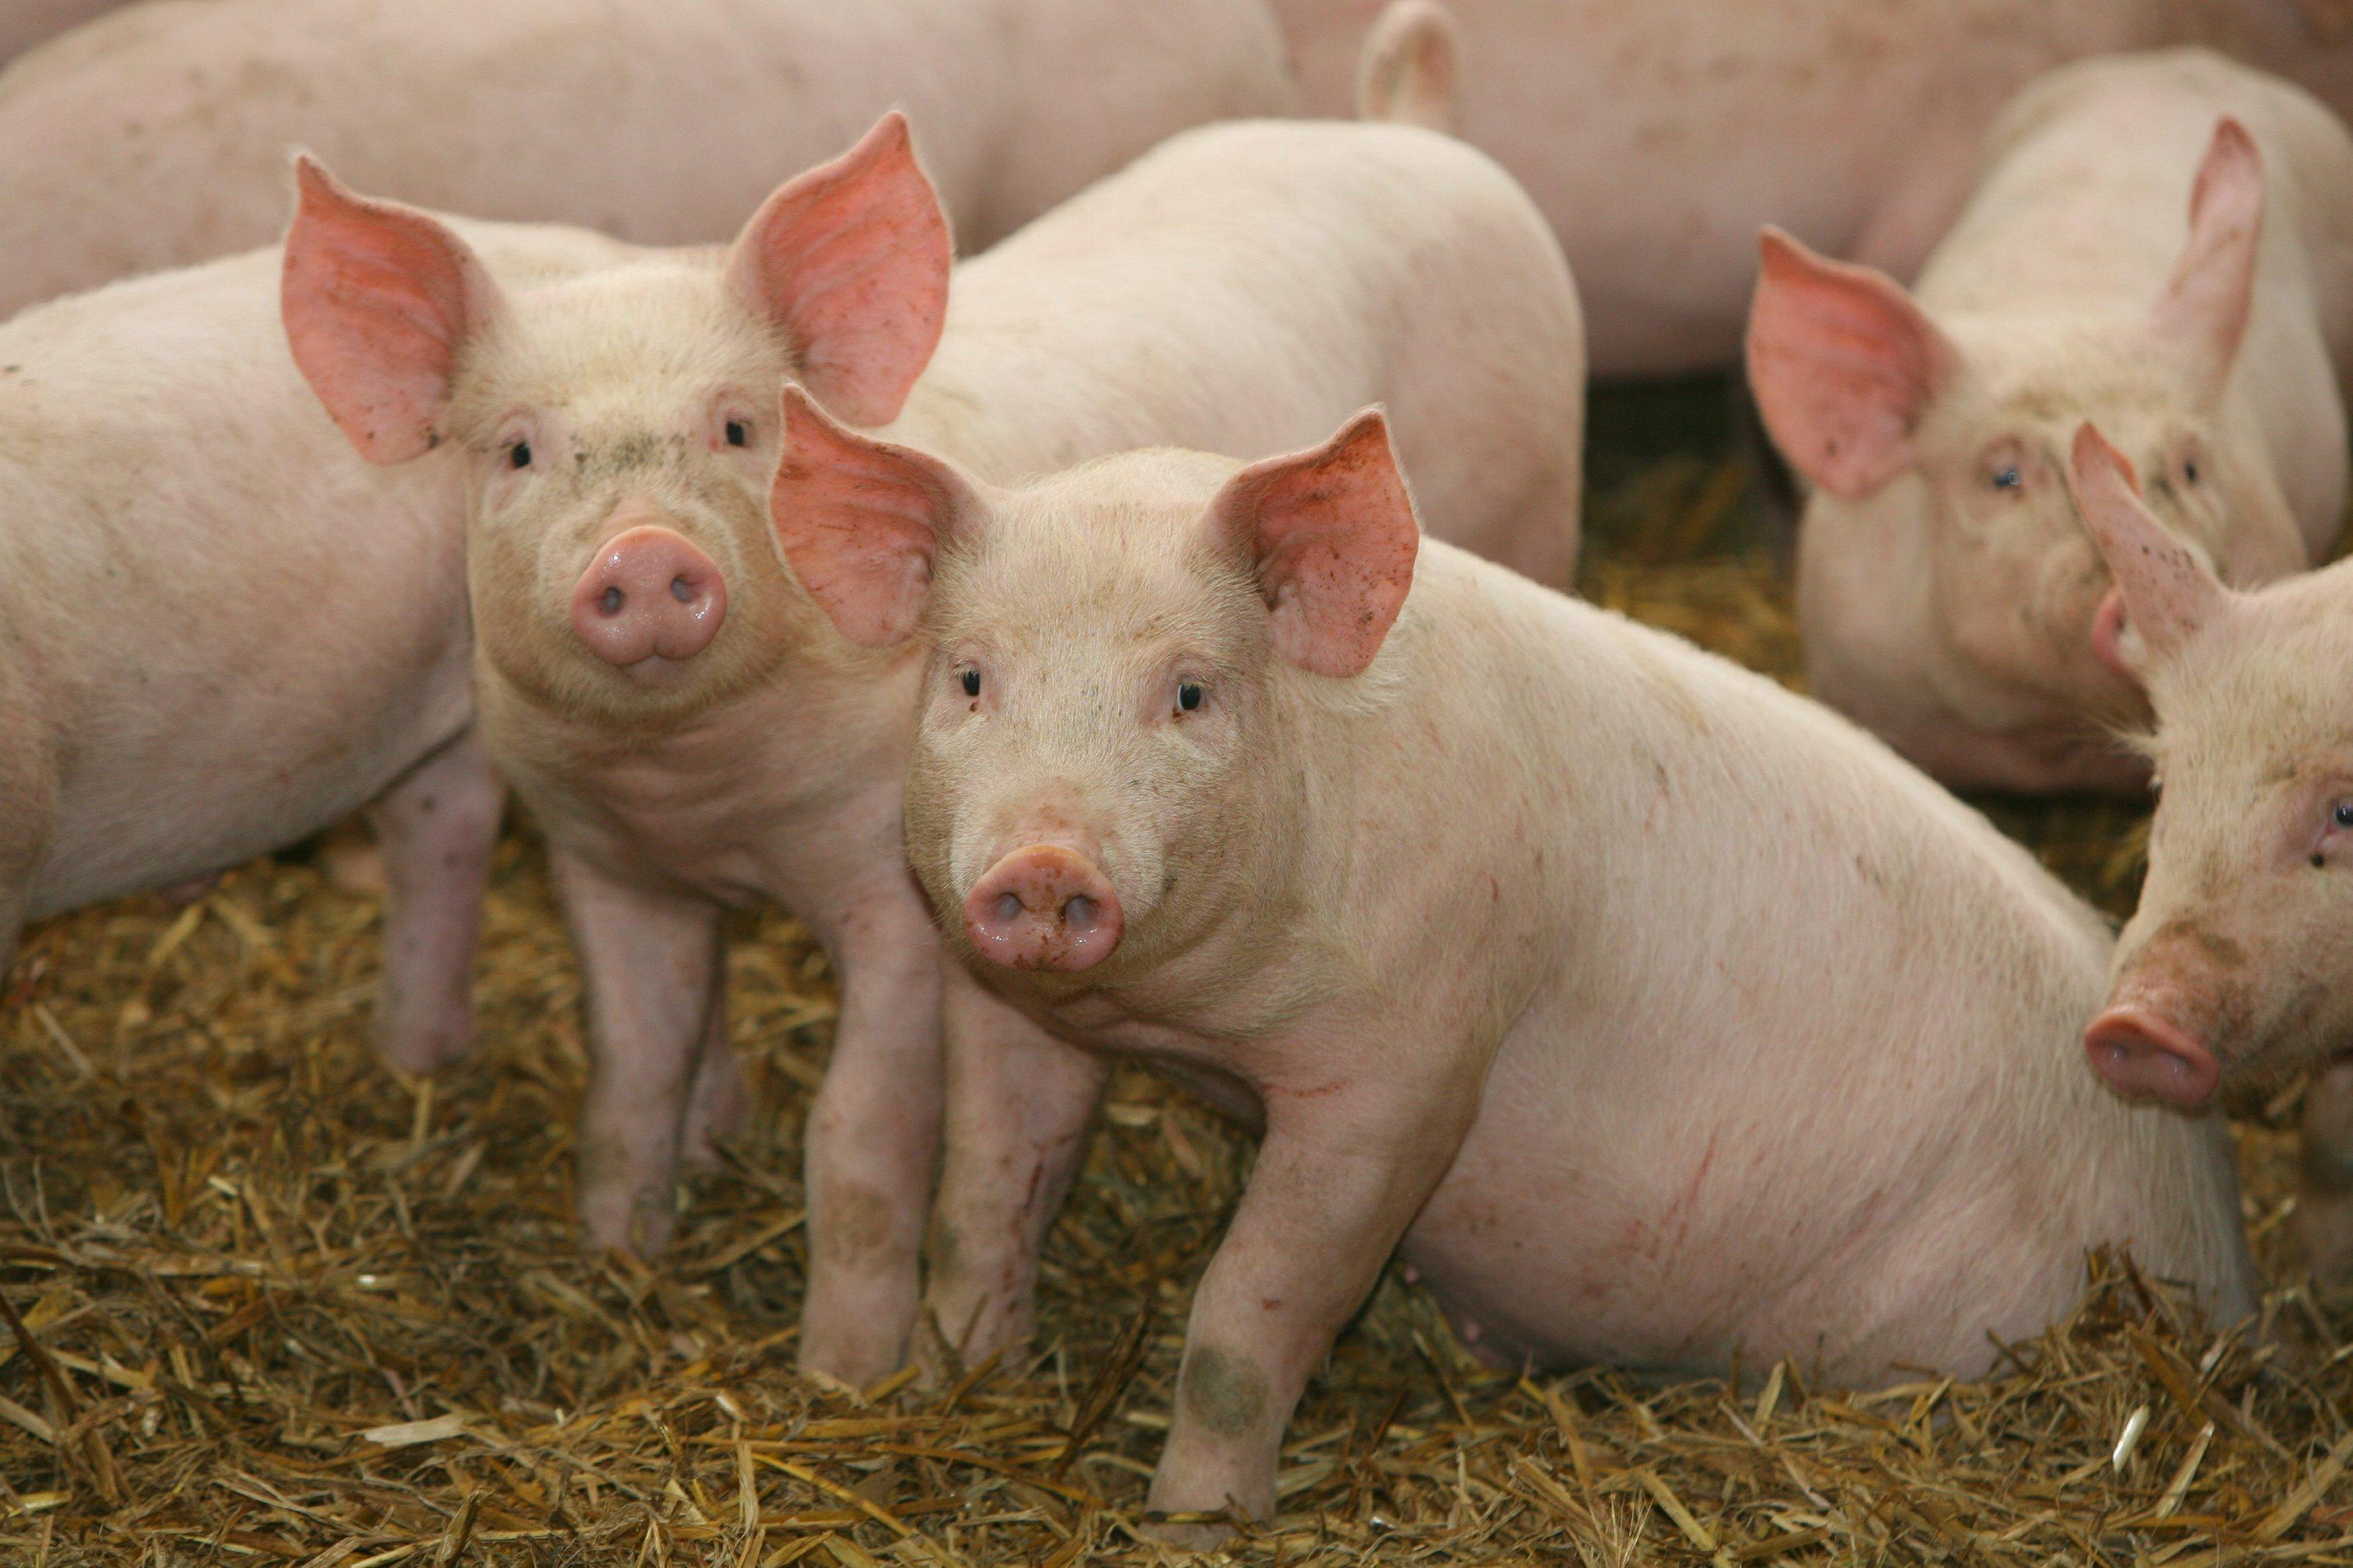 Russian bank pumps millions into pig farm project